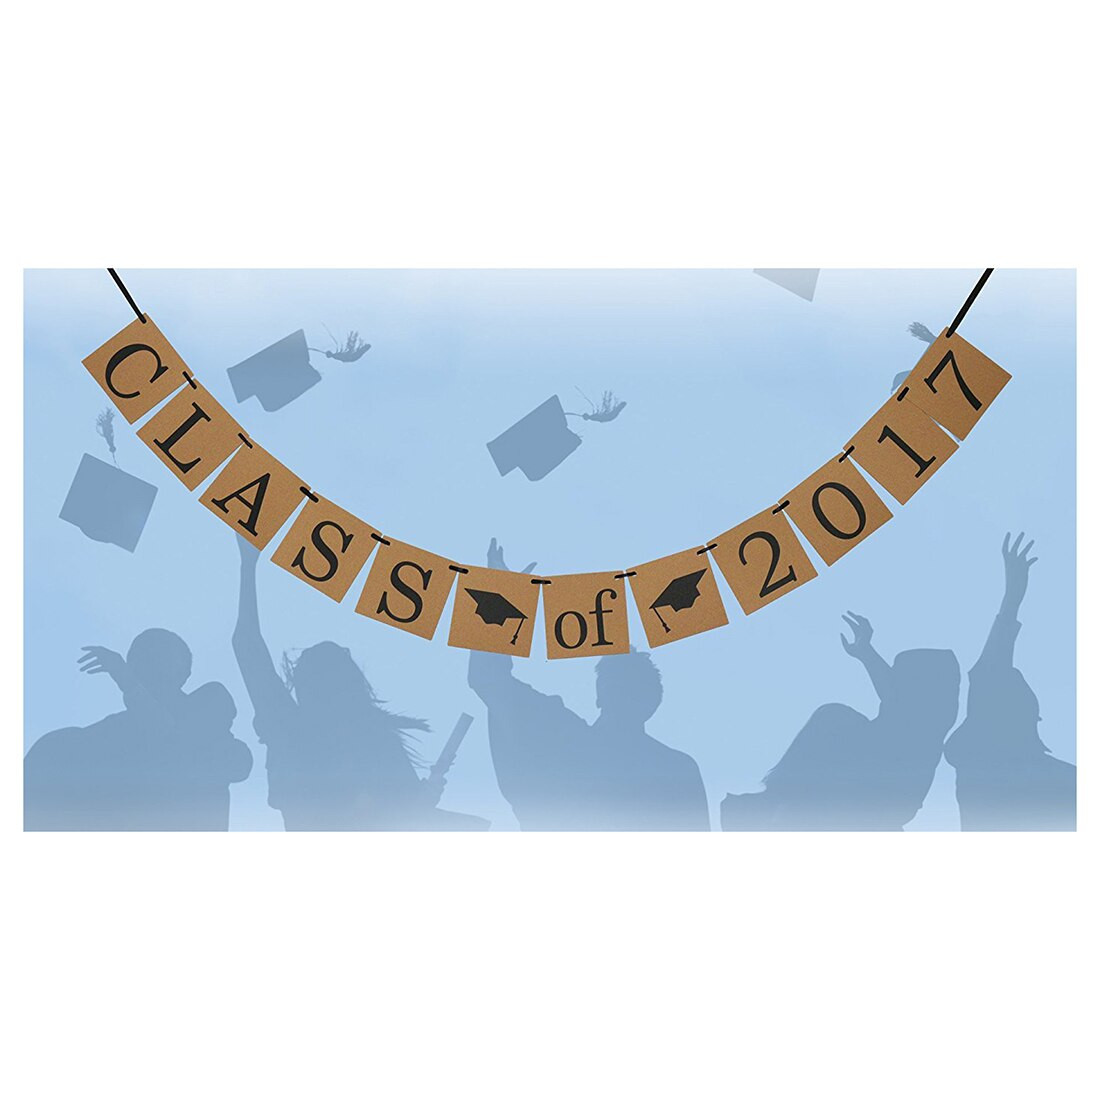 December College Graduation Party Ideas
 Aliexpress Buy Hot Class of 2017 Banner Graduation